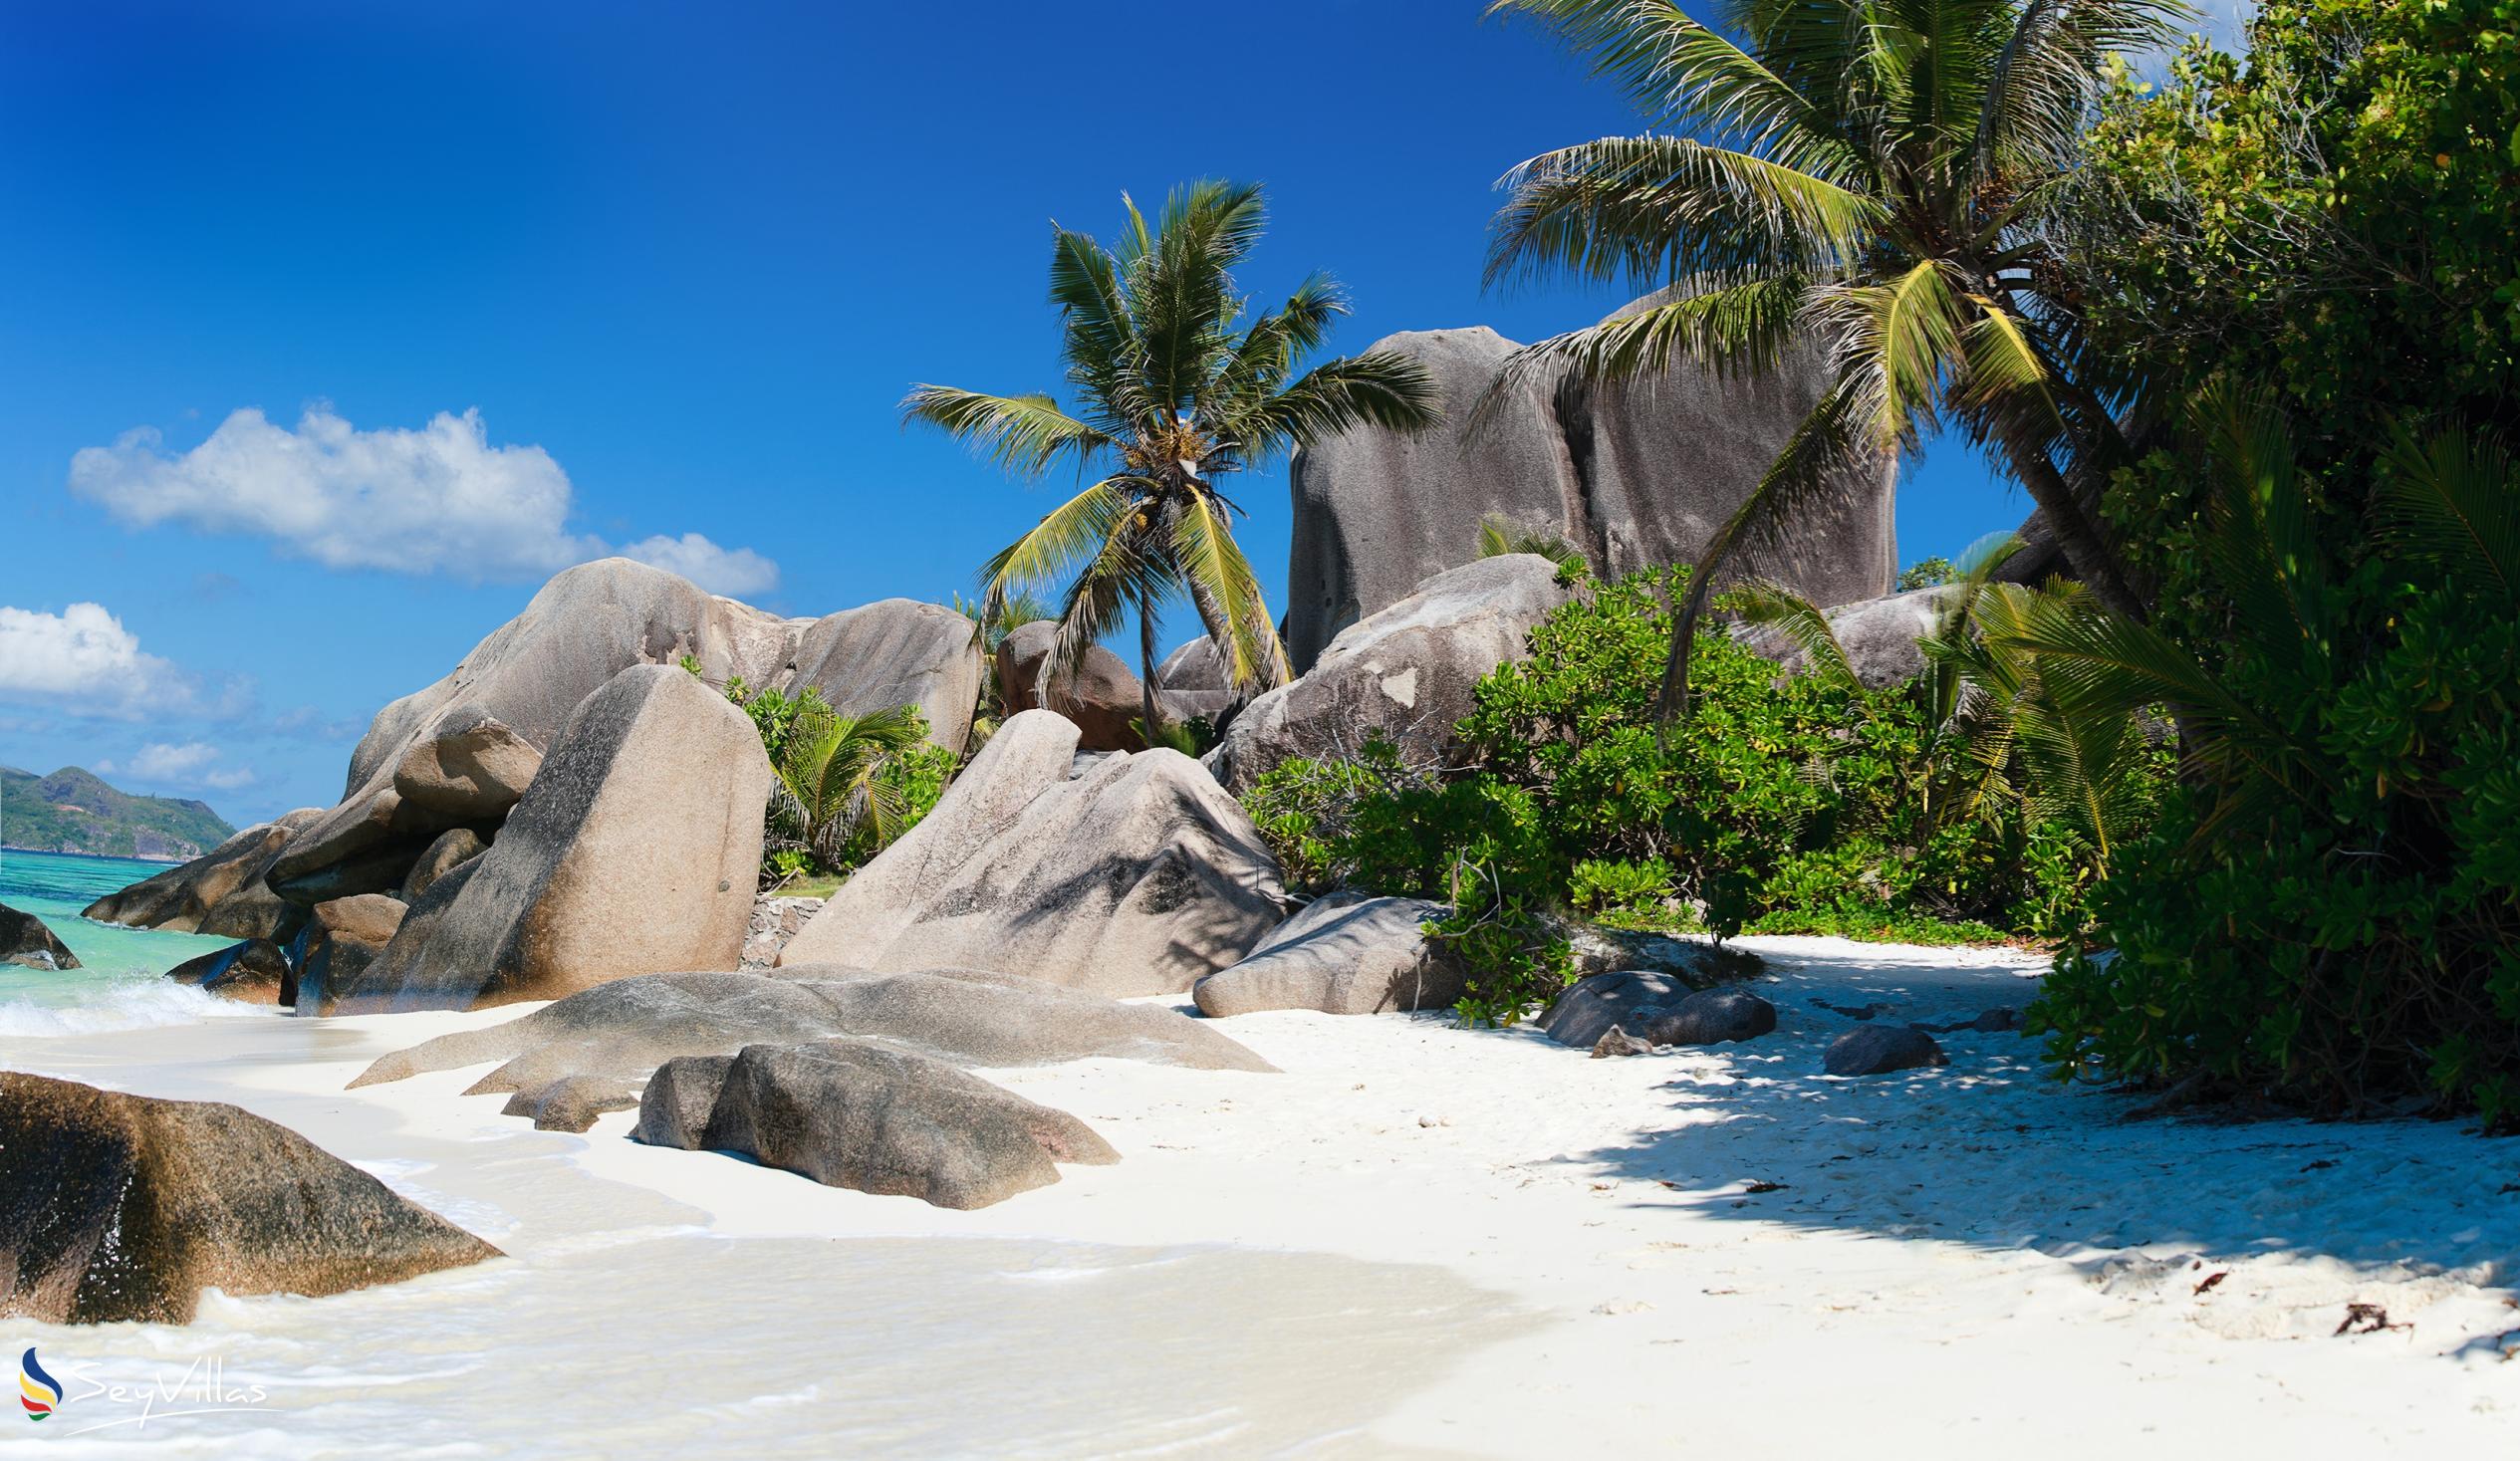 Photo 58: Pegasus Cruise (Variety Garden of Eden 3 nights) - Beaches - Seychelles (Seychelles)